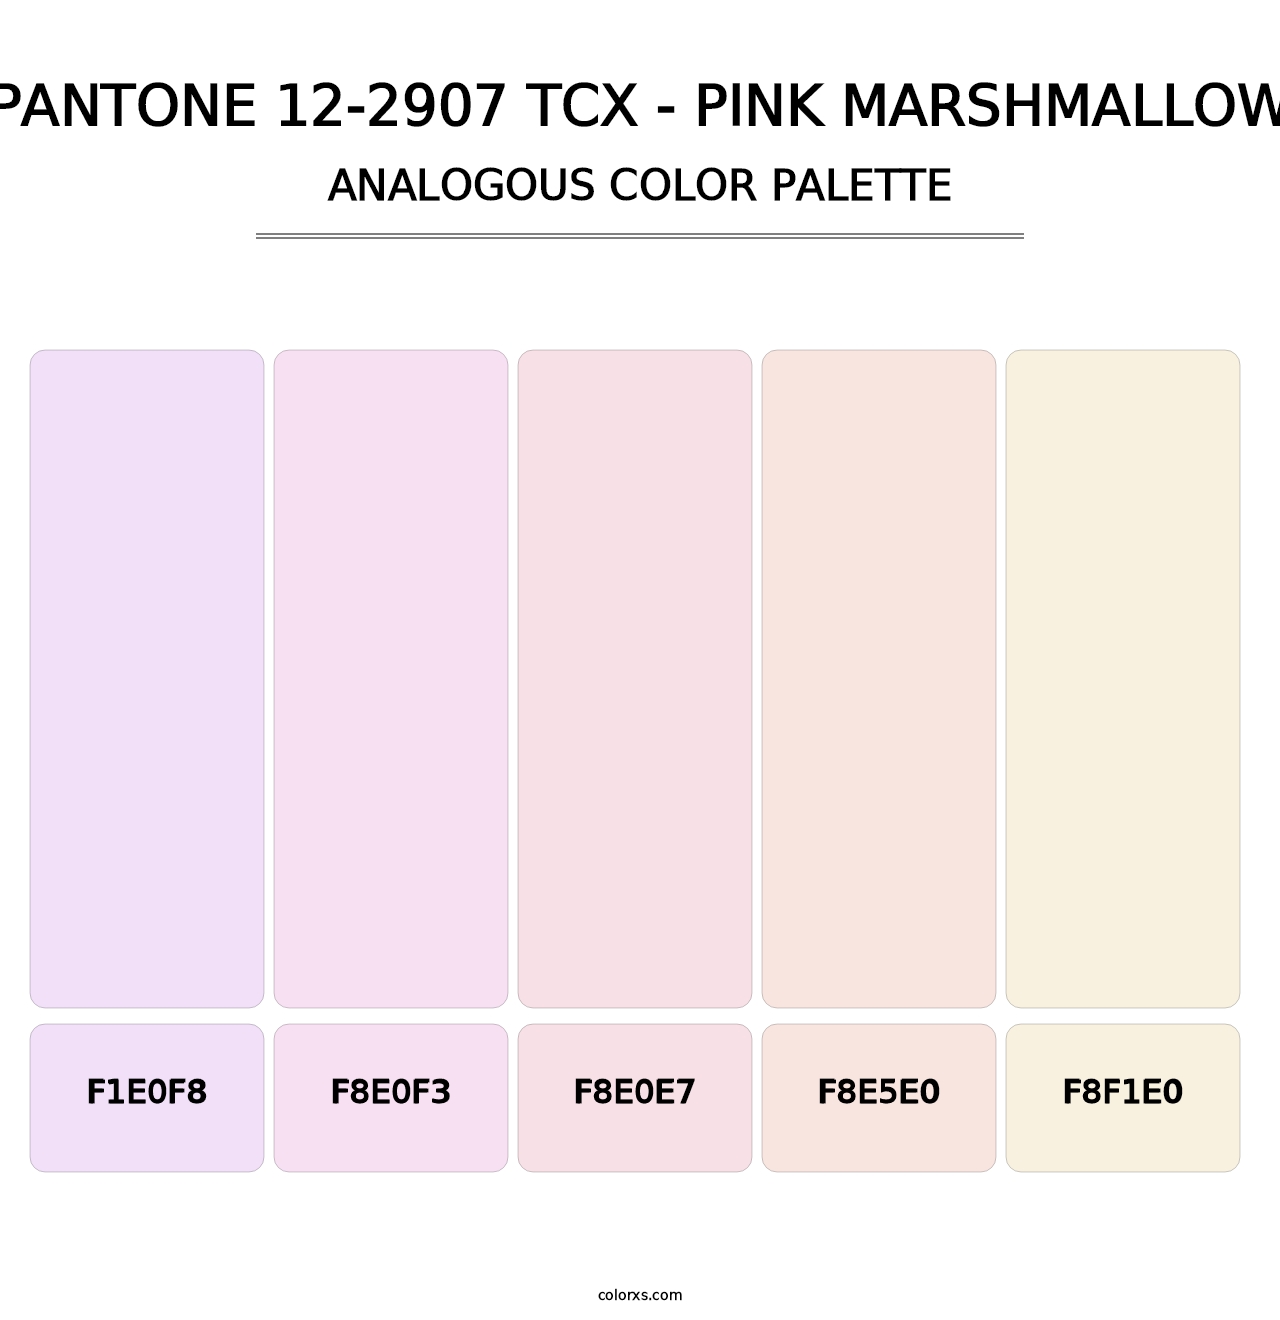 PANTONE 12-2907 TCX - Pink Marshmallow - Analogous Color Palette